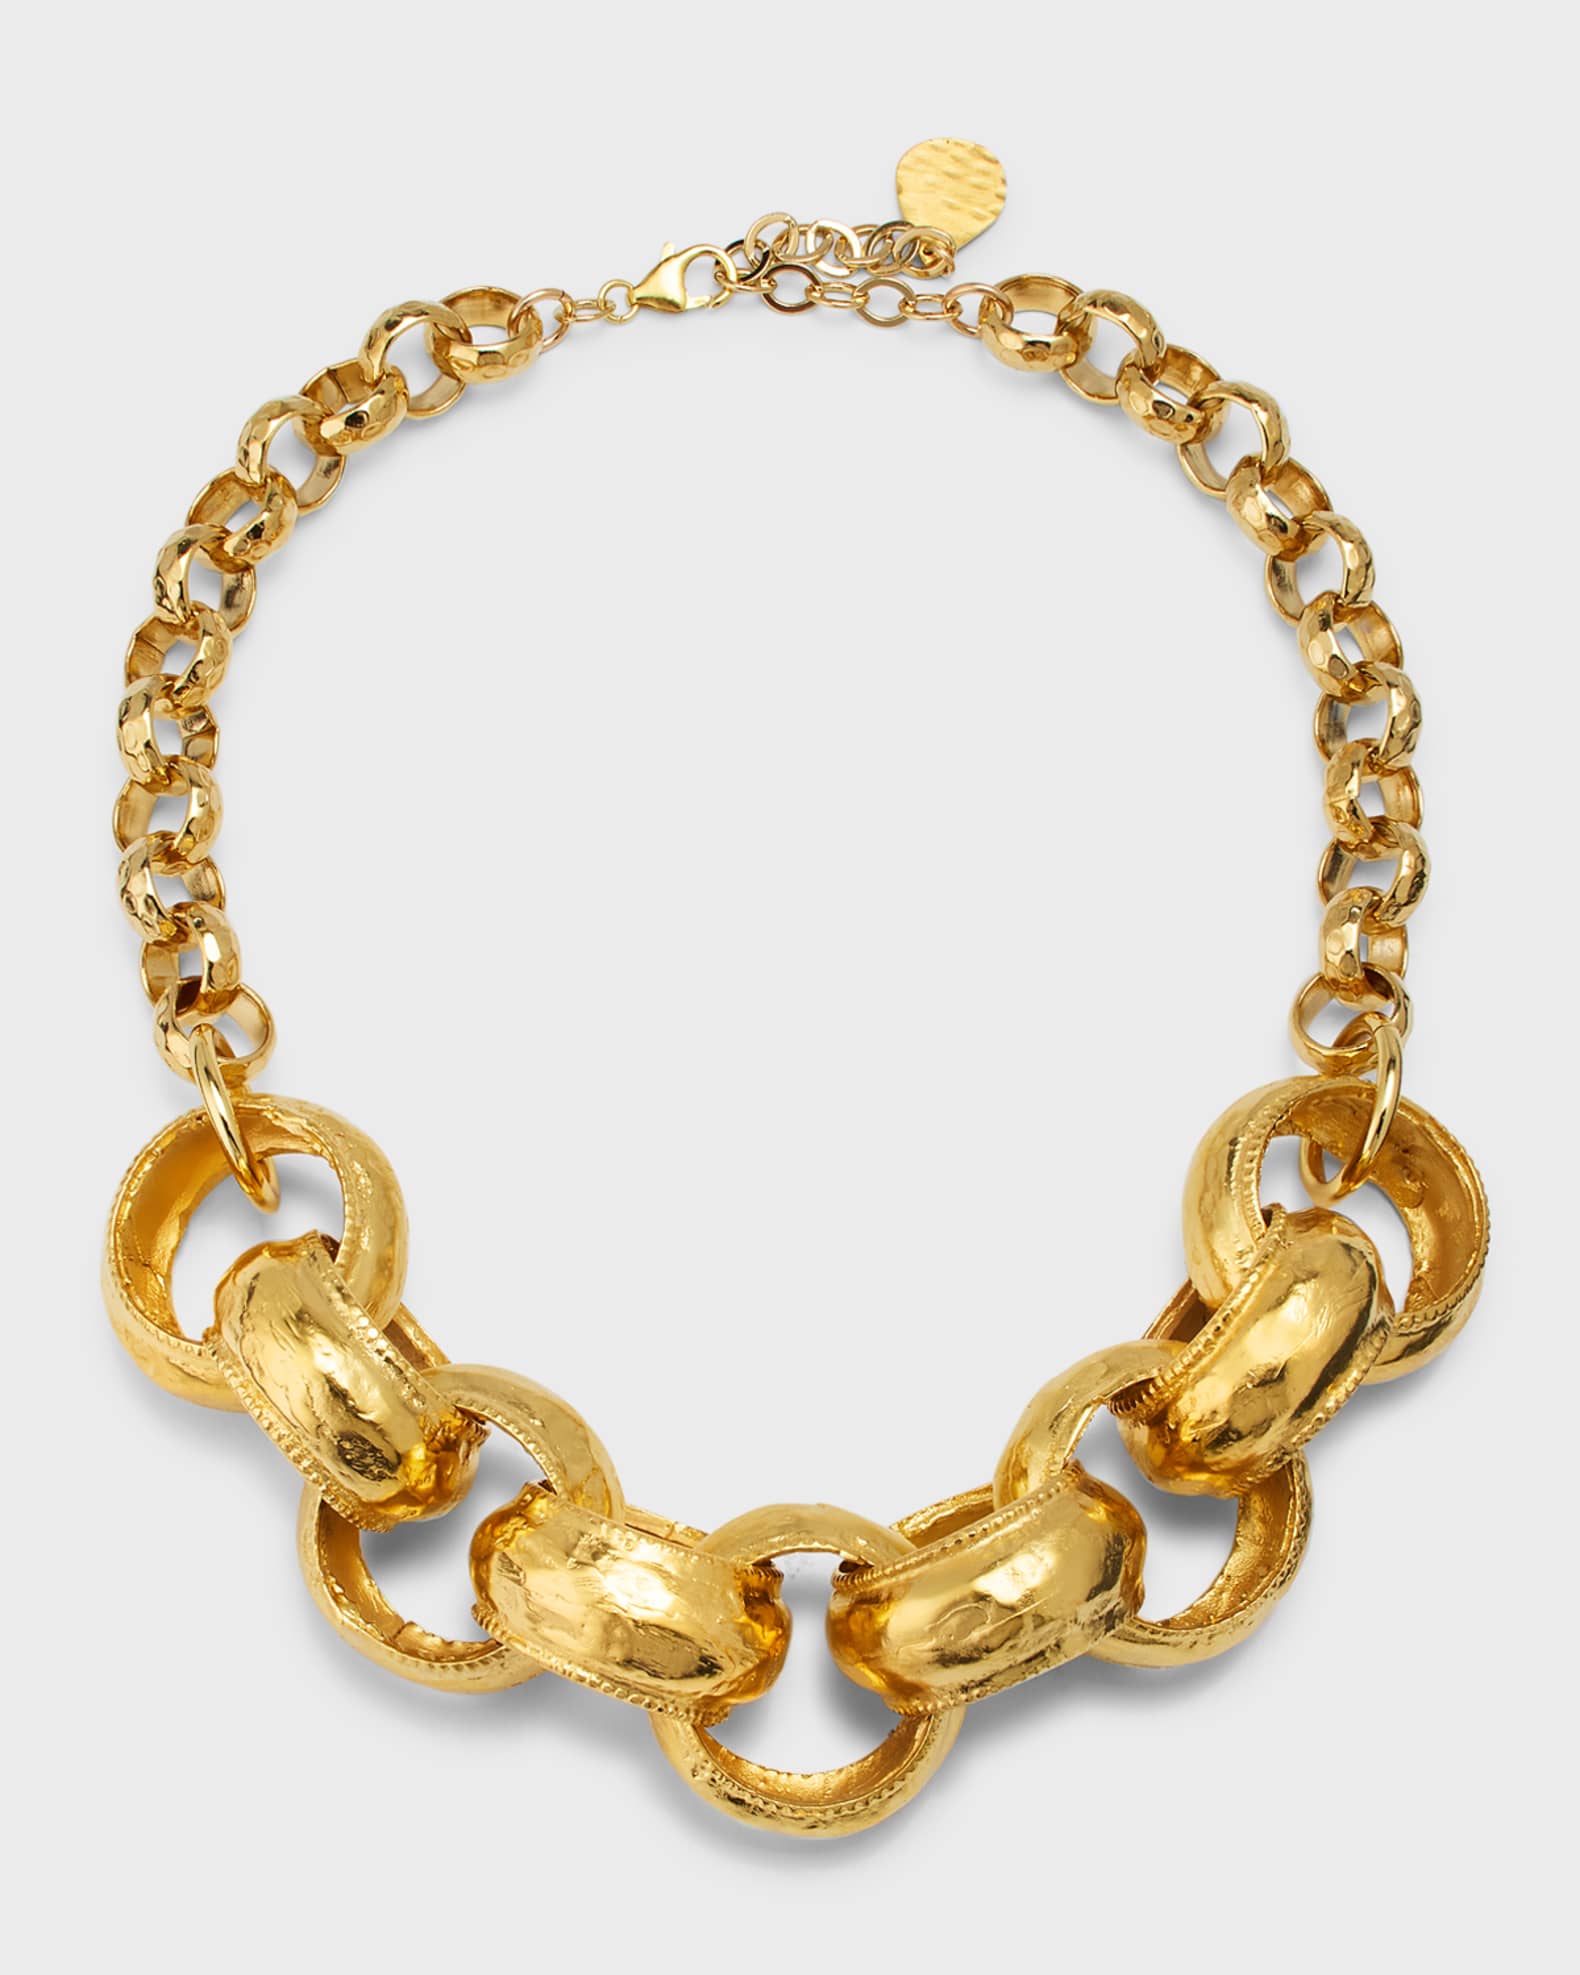 Devon Leigh Gold Mongolian Chain Necklace | Neiman Marcus